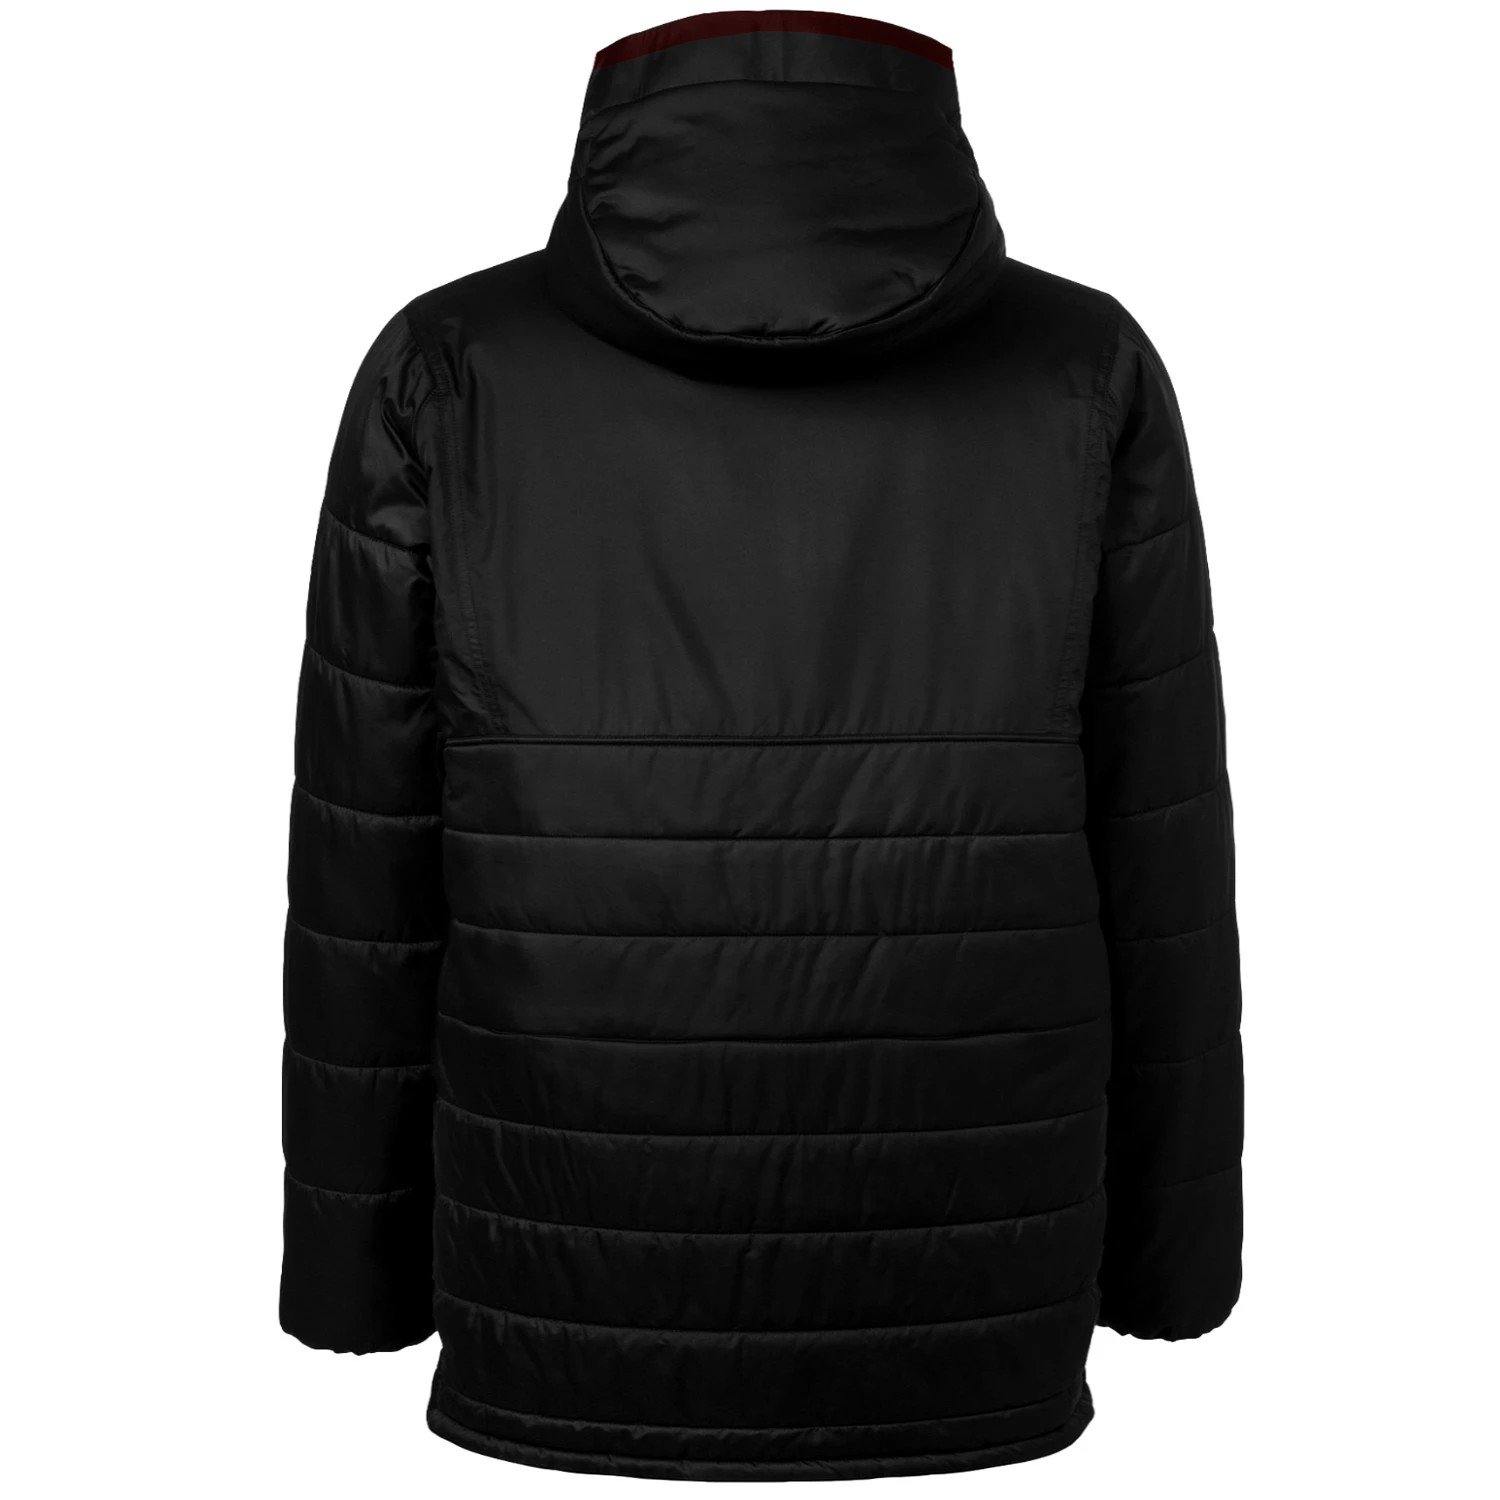 Puma AC MILAN JACKET - Training jacket - black/asphalt/black 